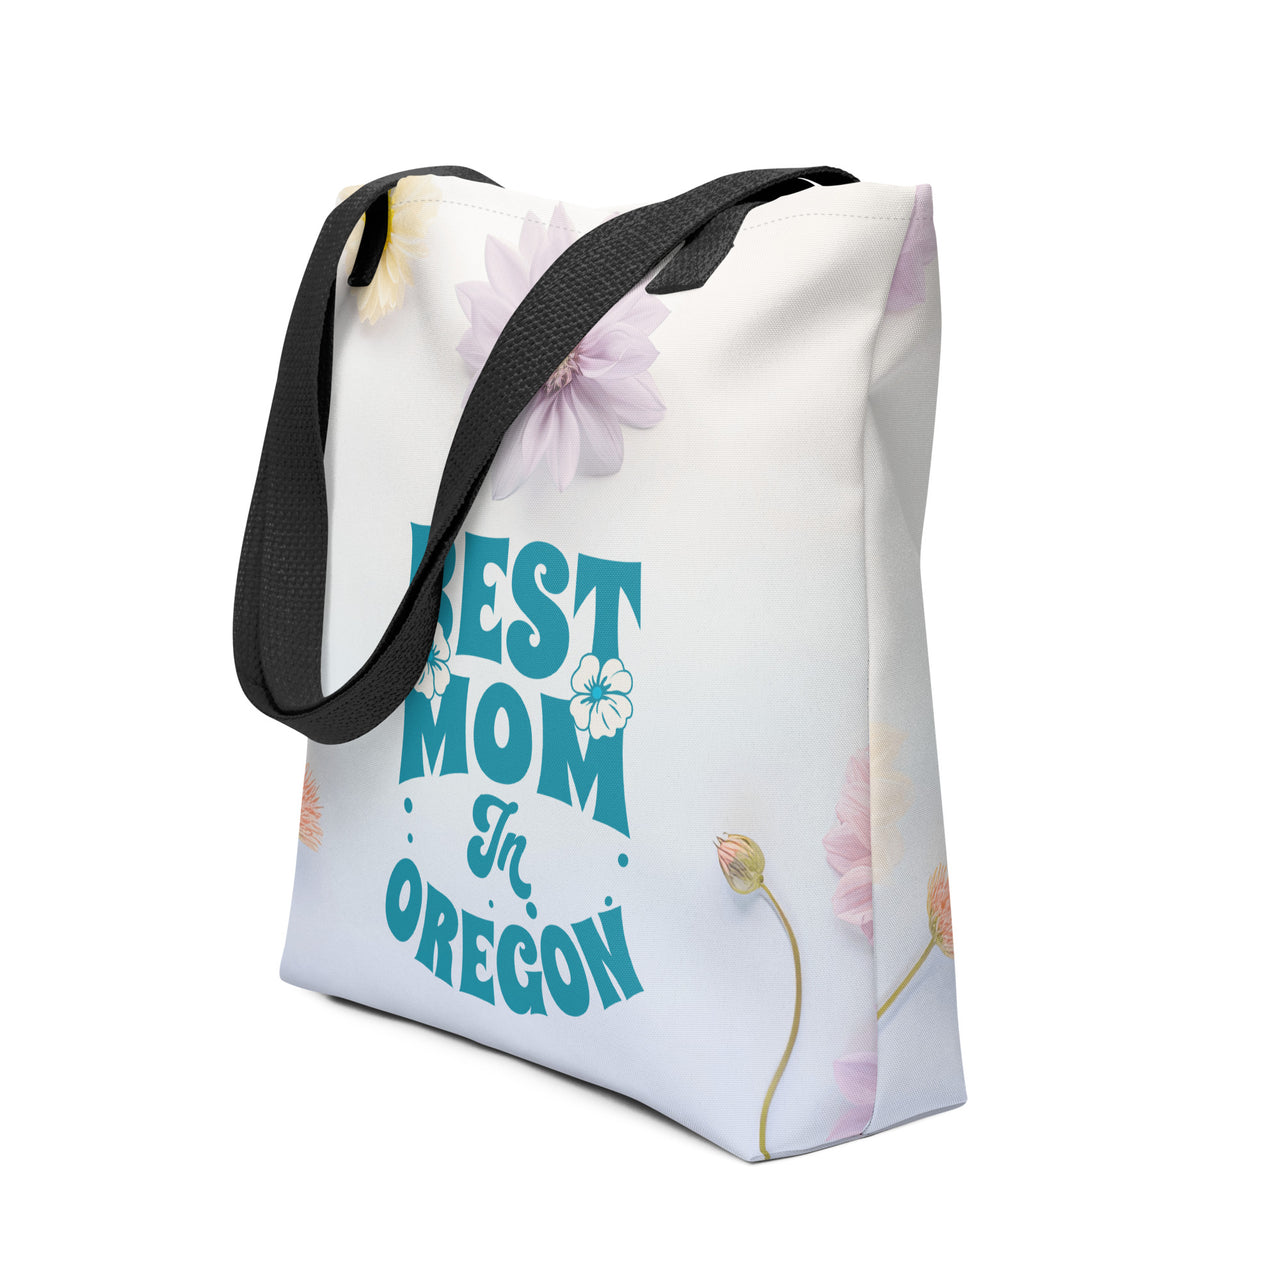 Best Mom in Oregon/2 - Tote bag